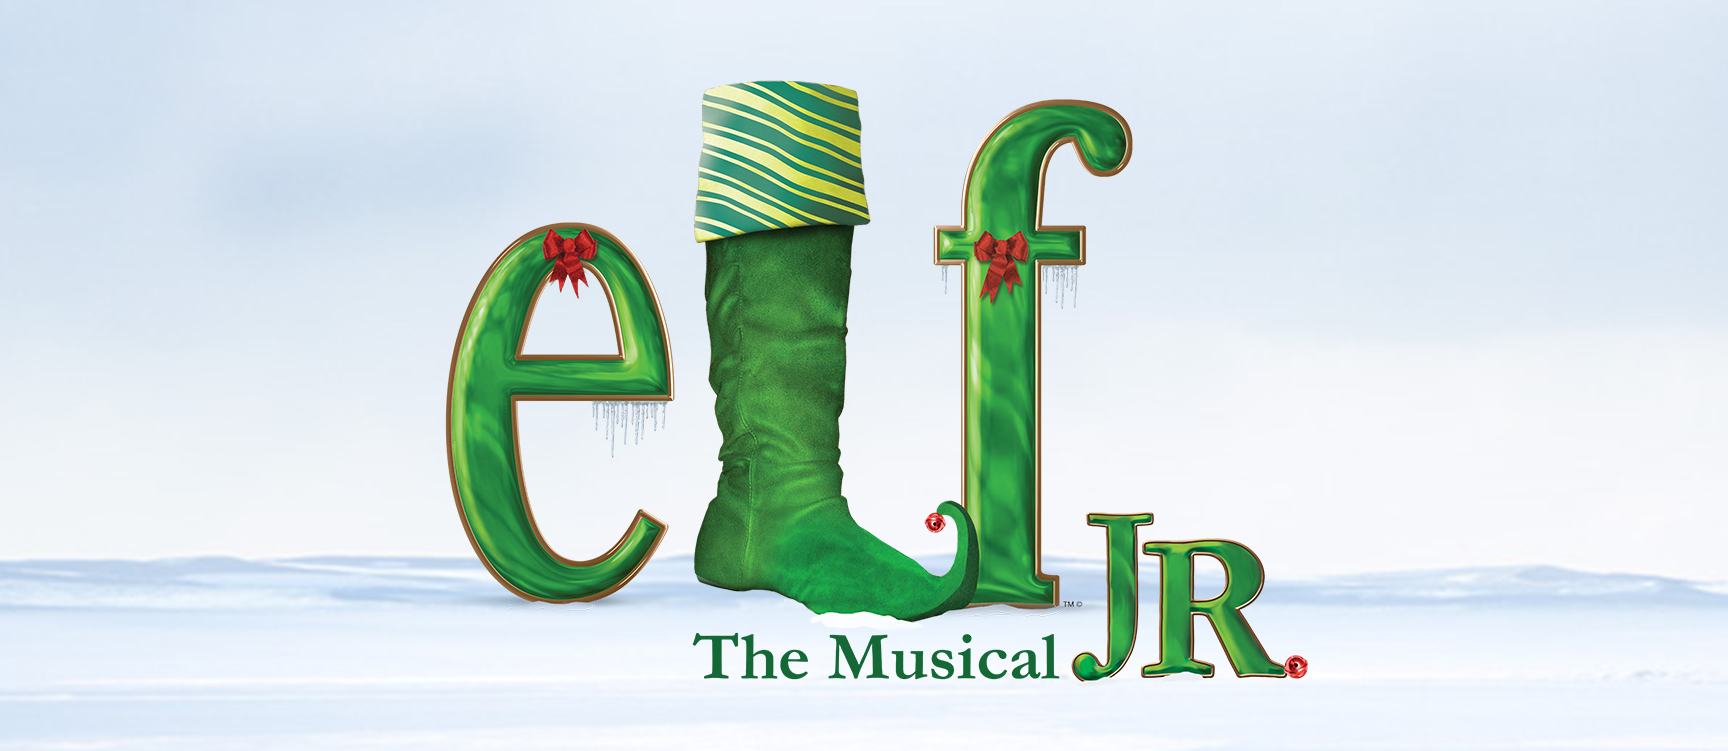 Elf the Musical Jr.